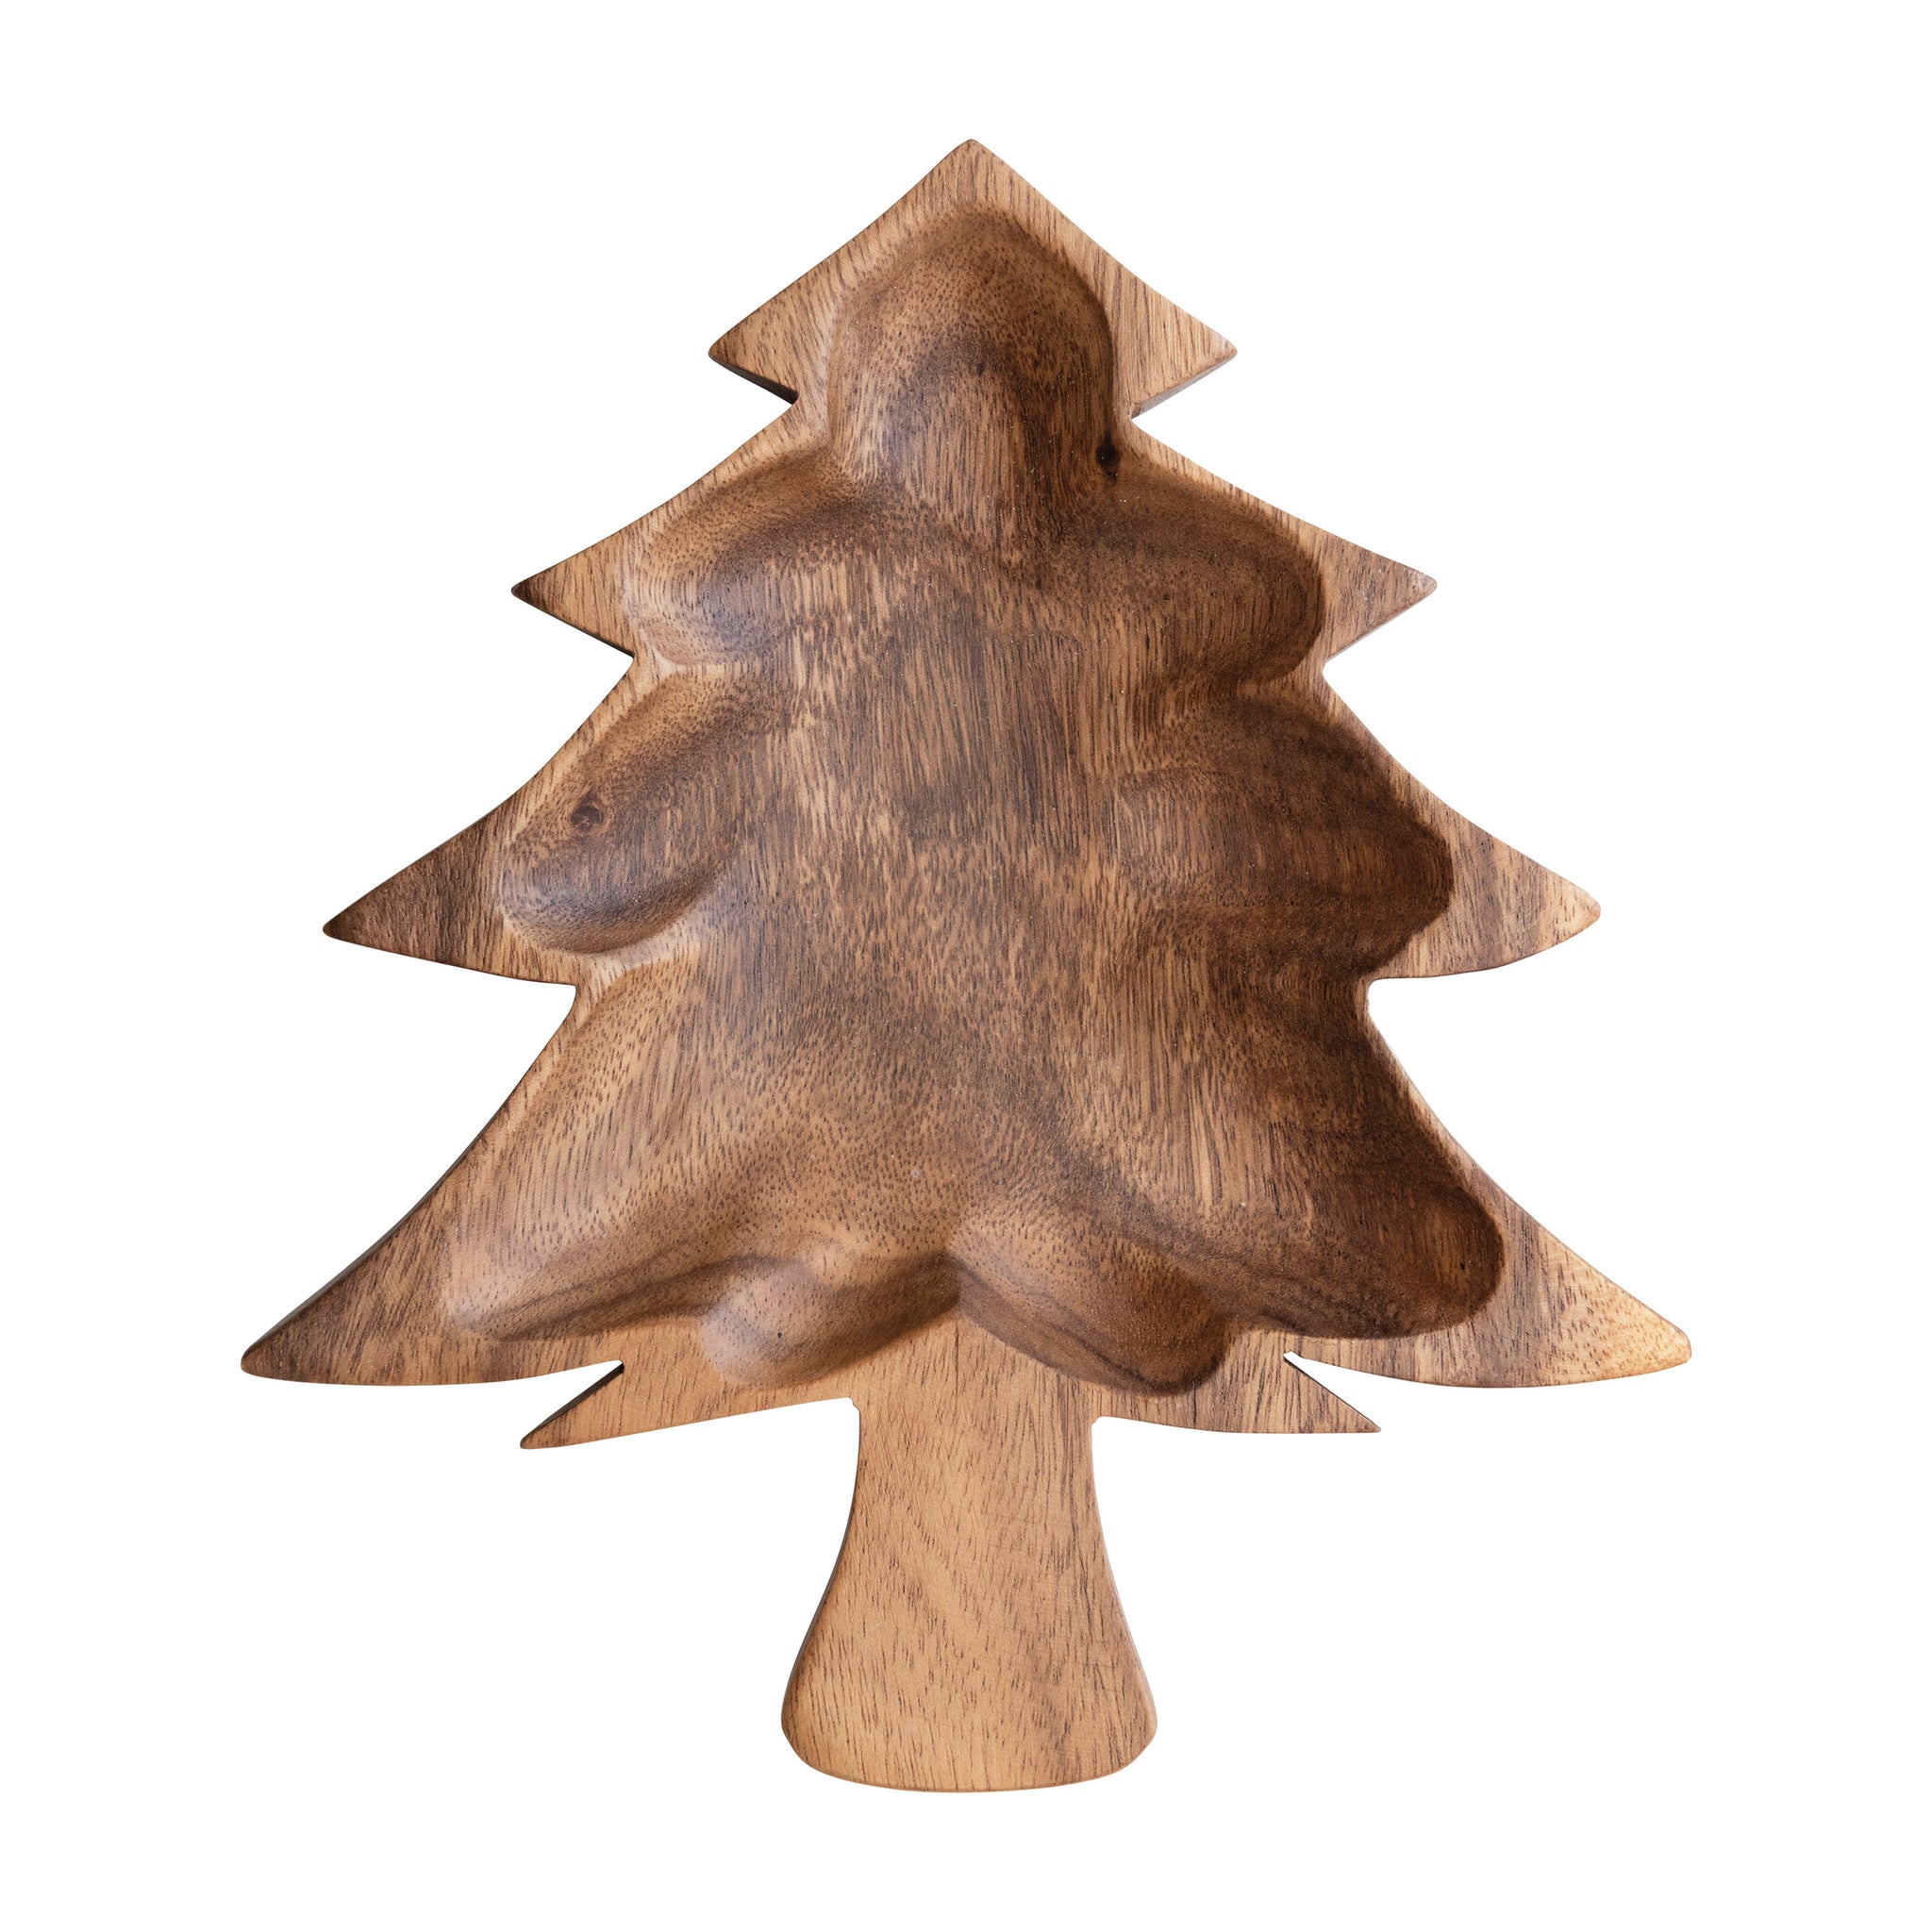 Carved Natural Acacia Wood Christmas Tree Shaped Bowl Tray. 9.75 in, L